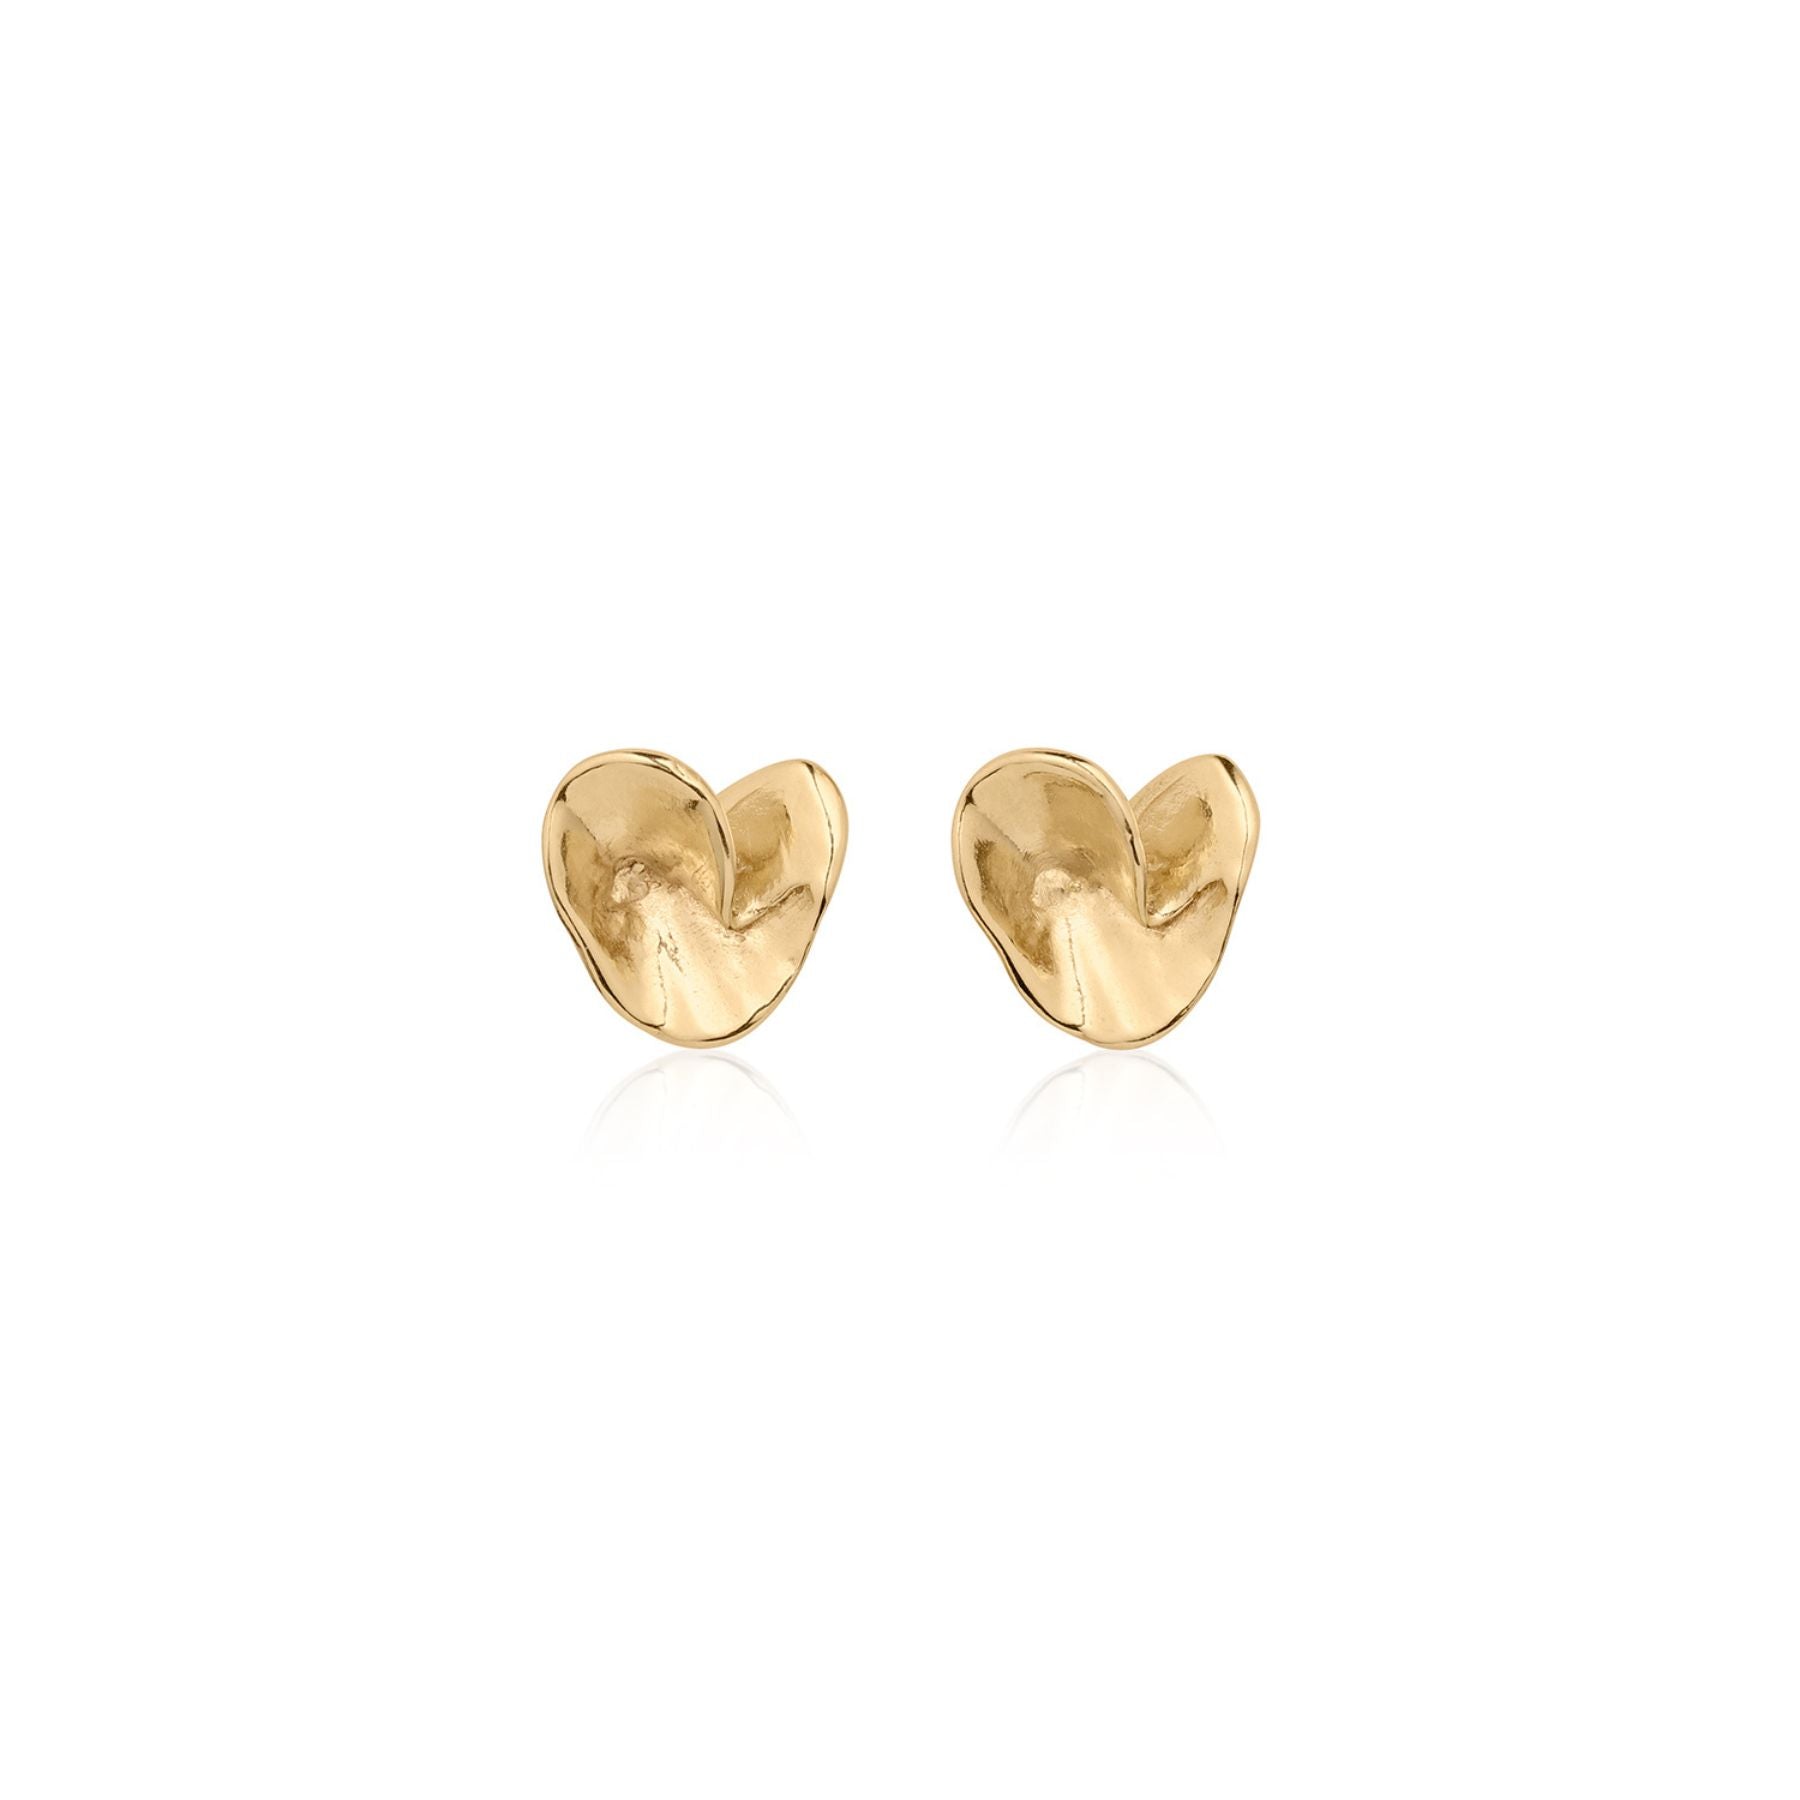 Organically textured folded heart stud earrings in 14 karat yellow gold